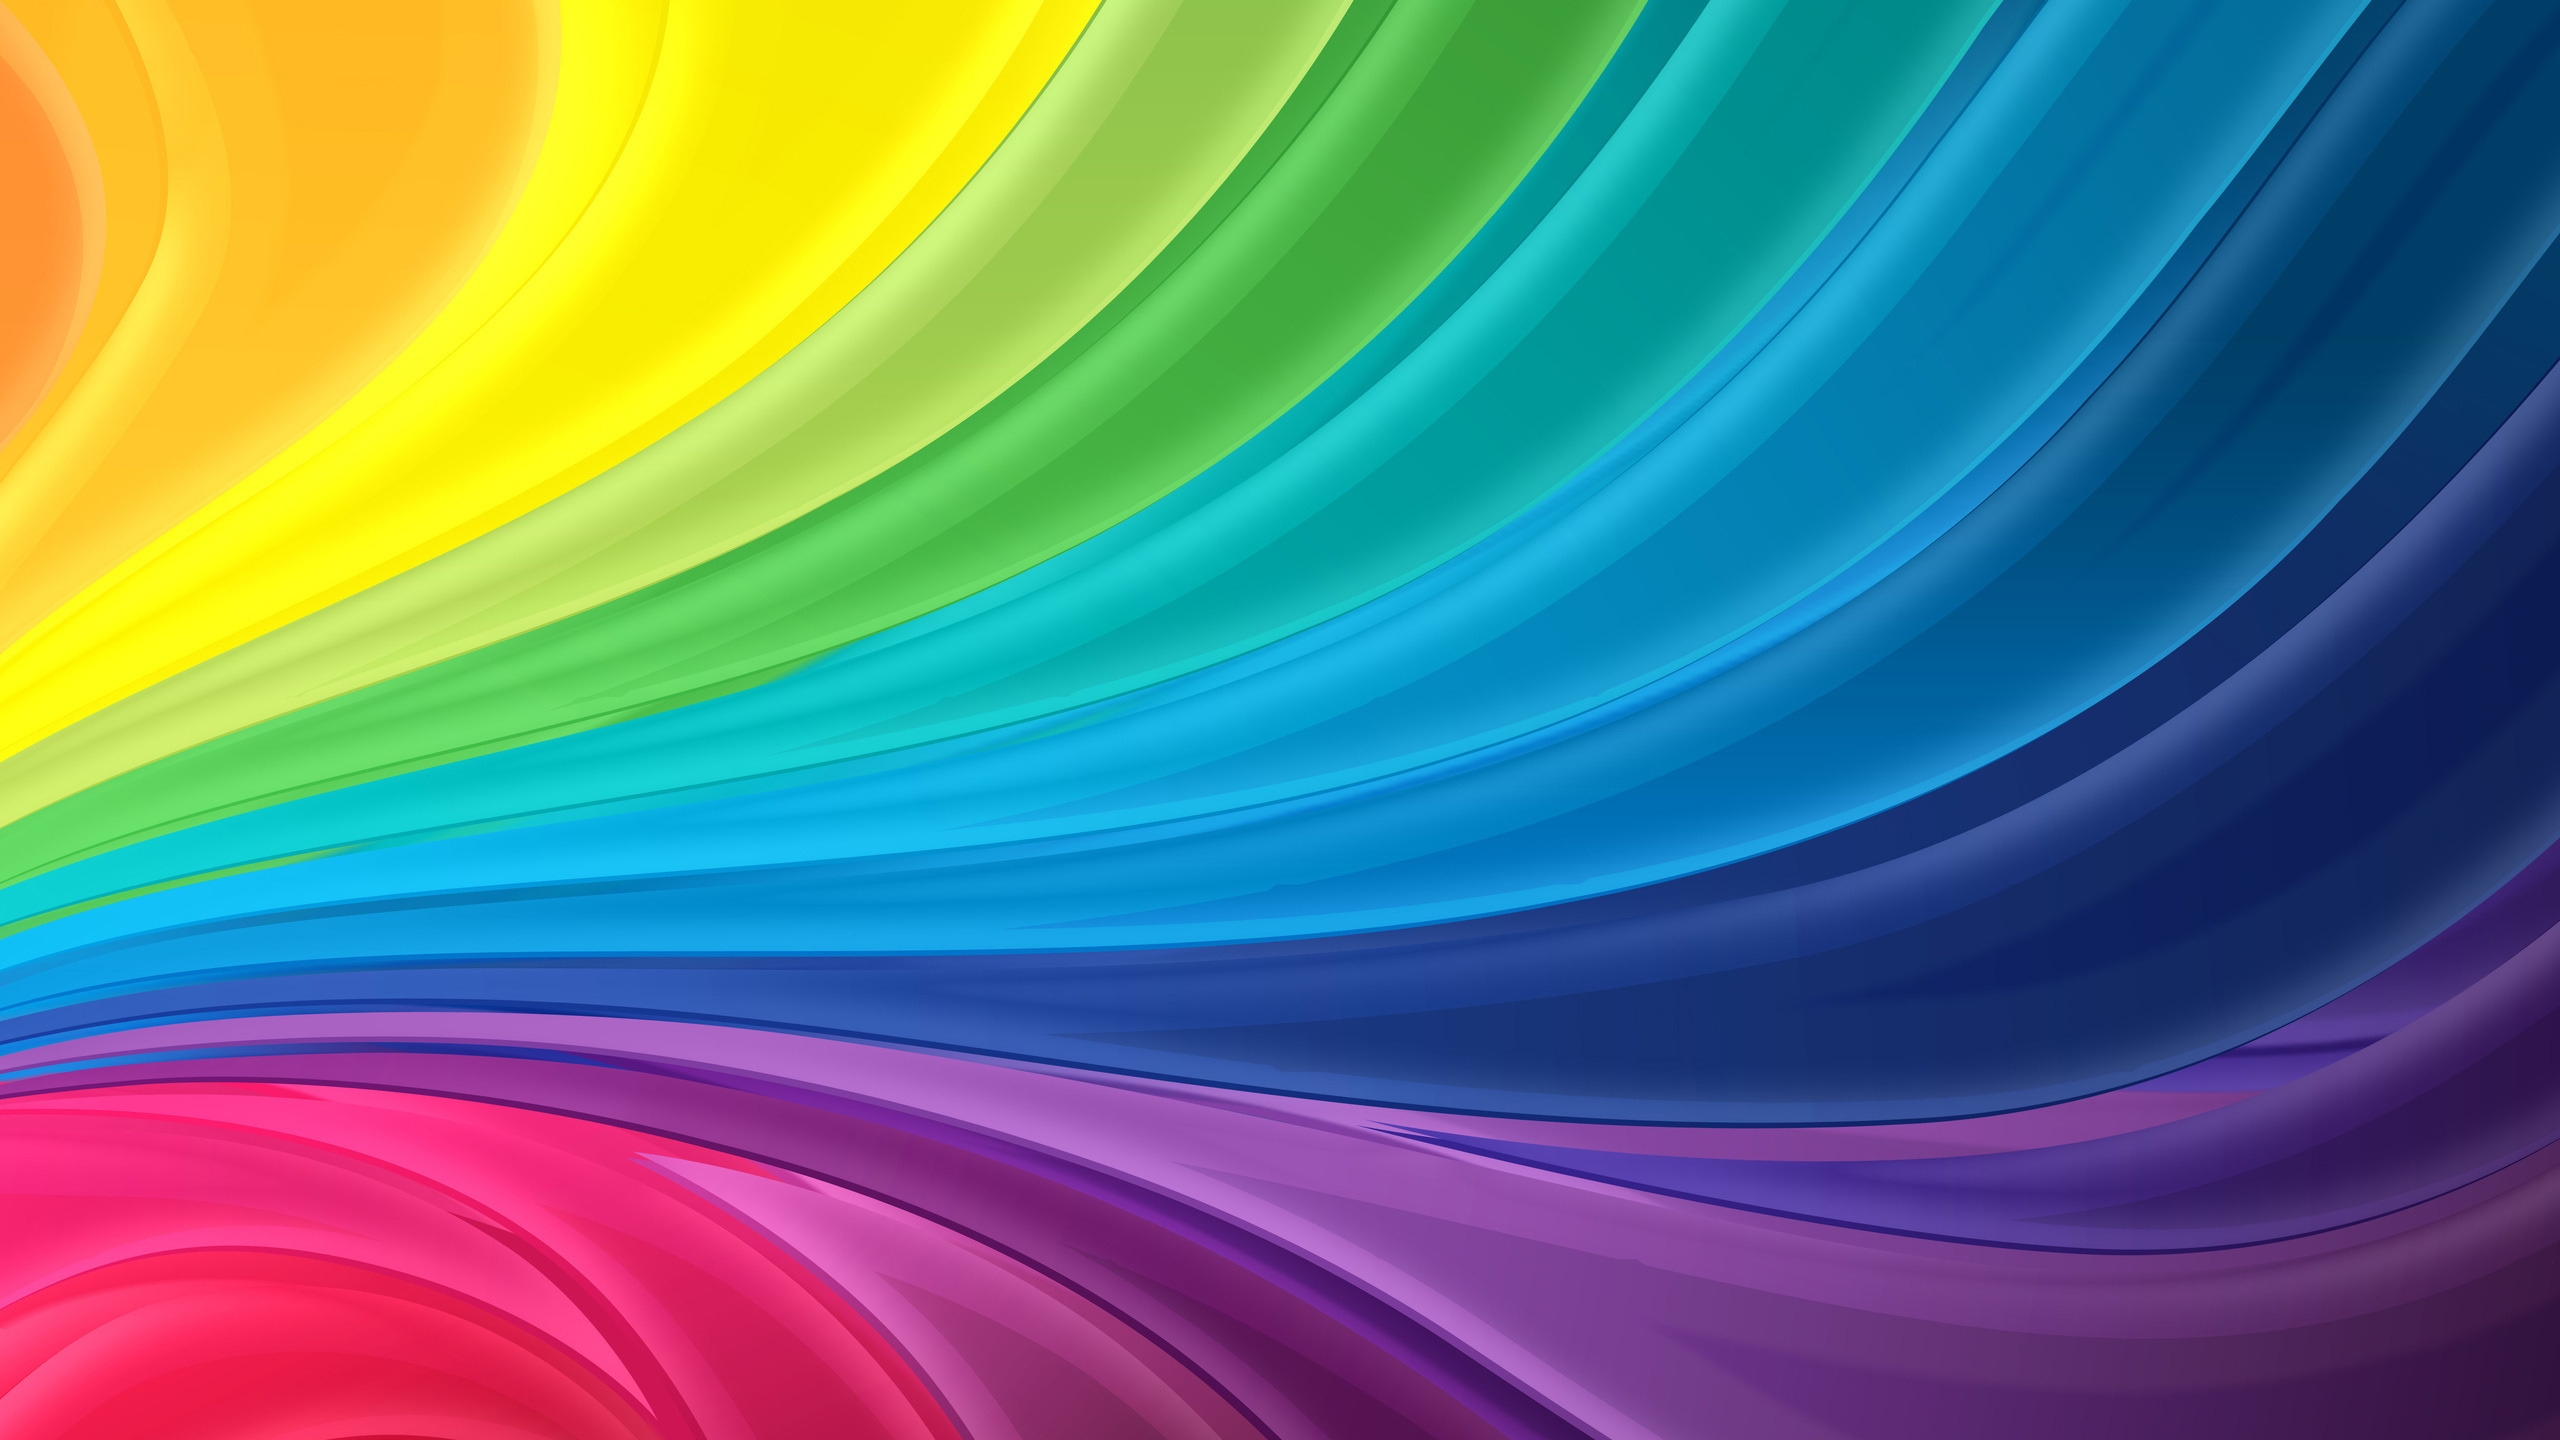 Curl Rainbow for 2560x1440 HDTV resolution